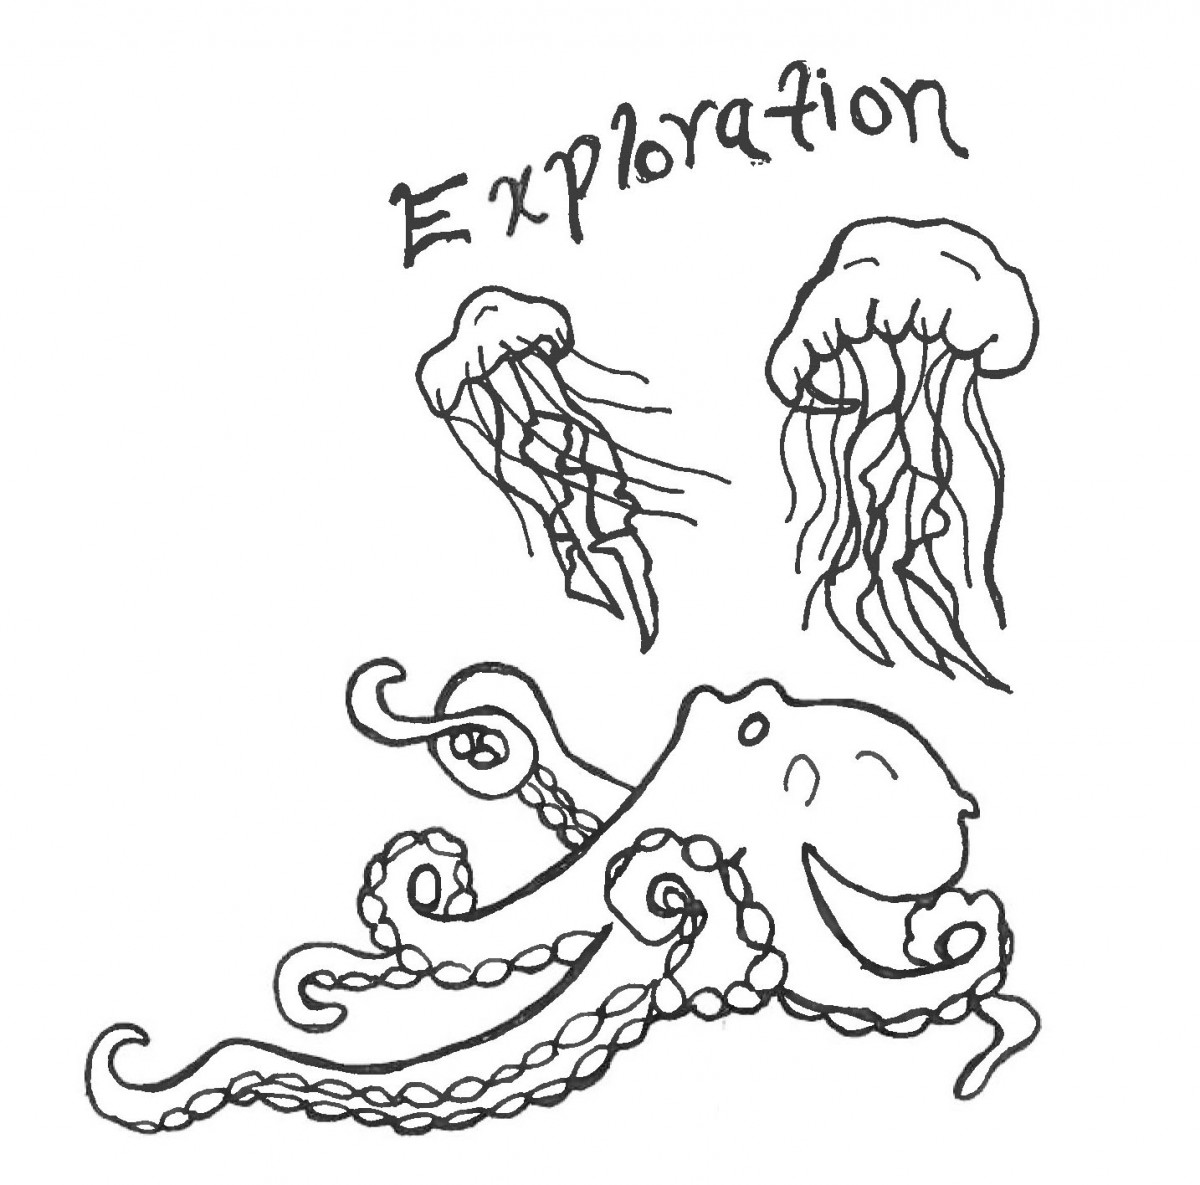 exploration_0.jpg